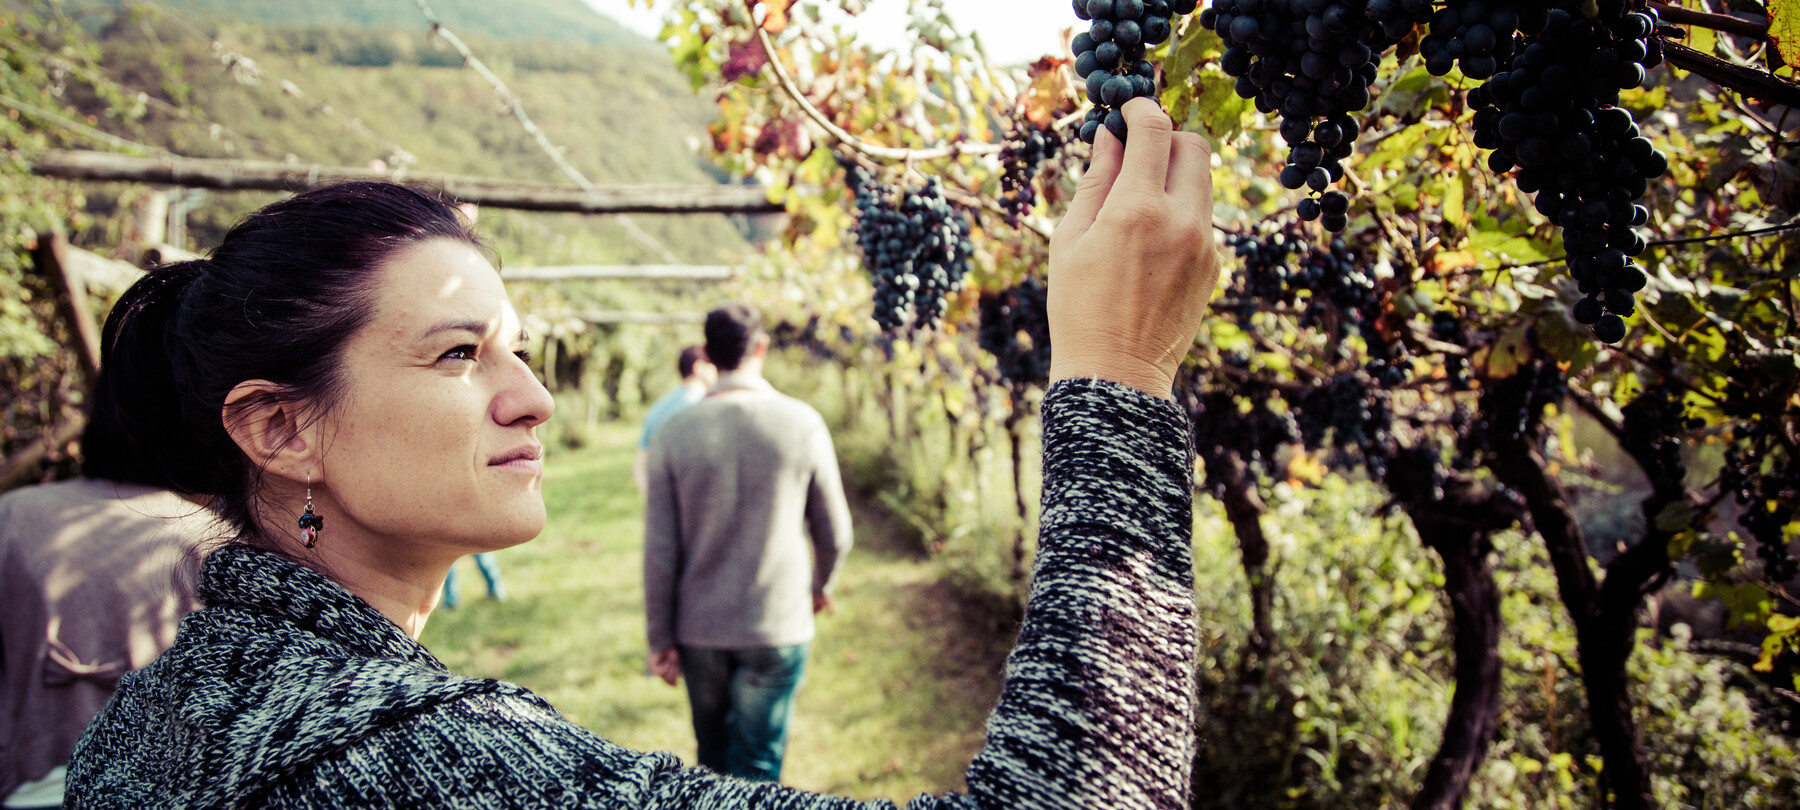 Food and Wine - Trentino Wines